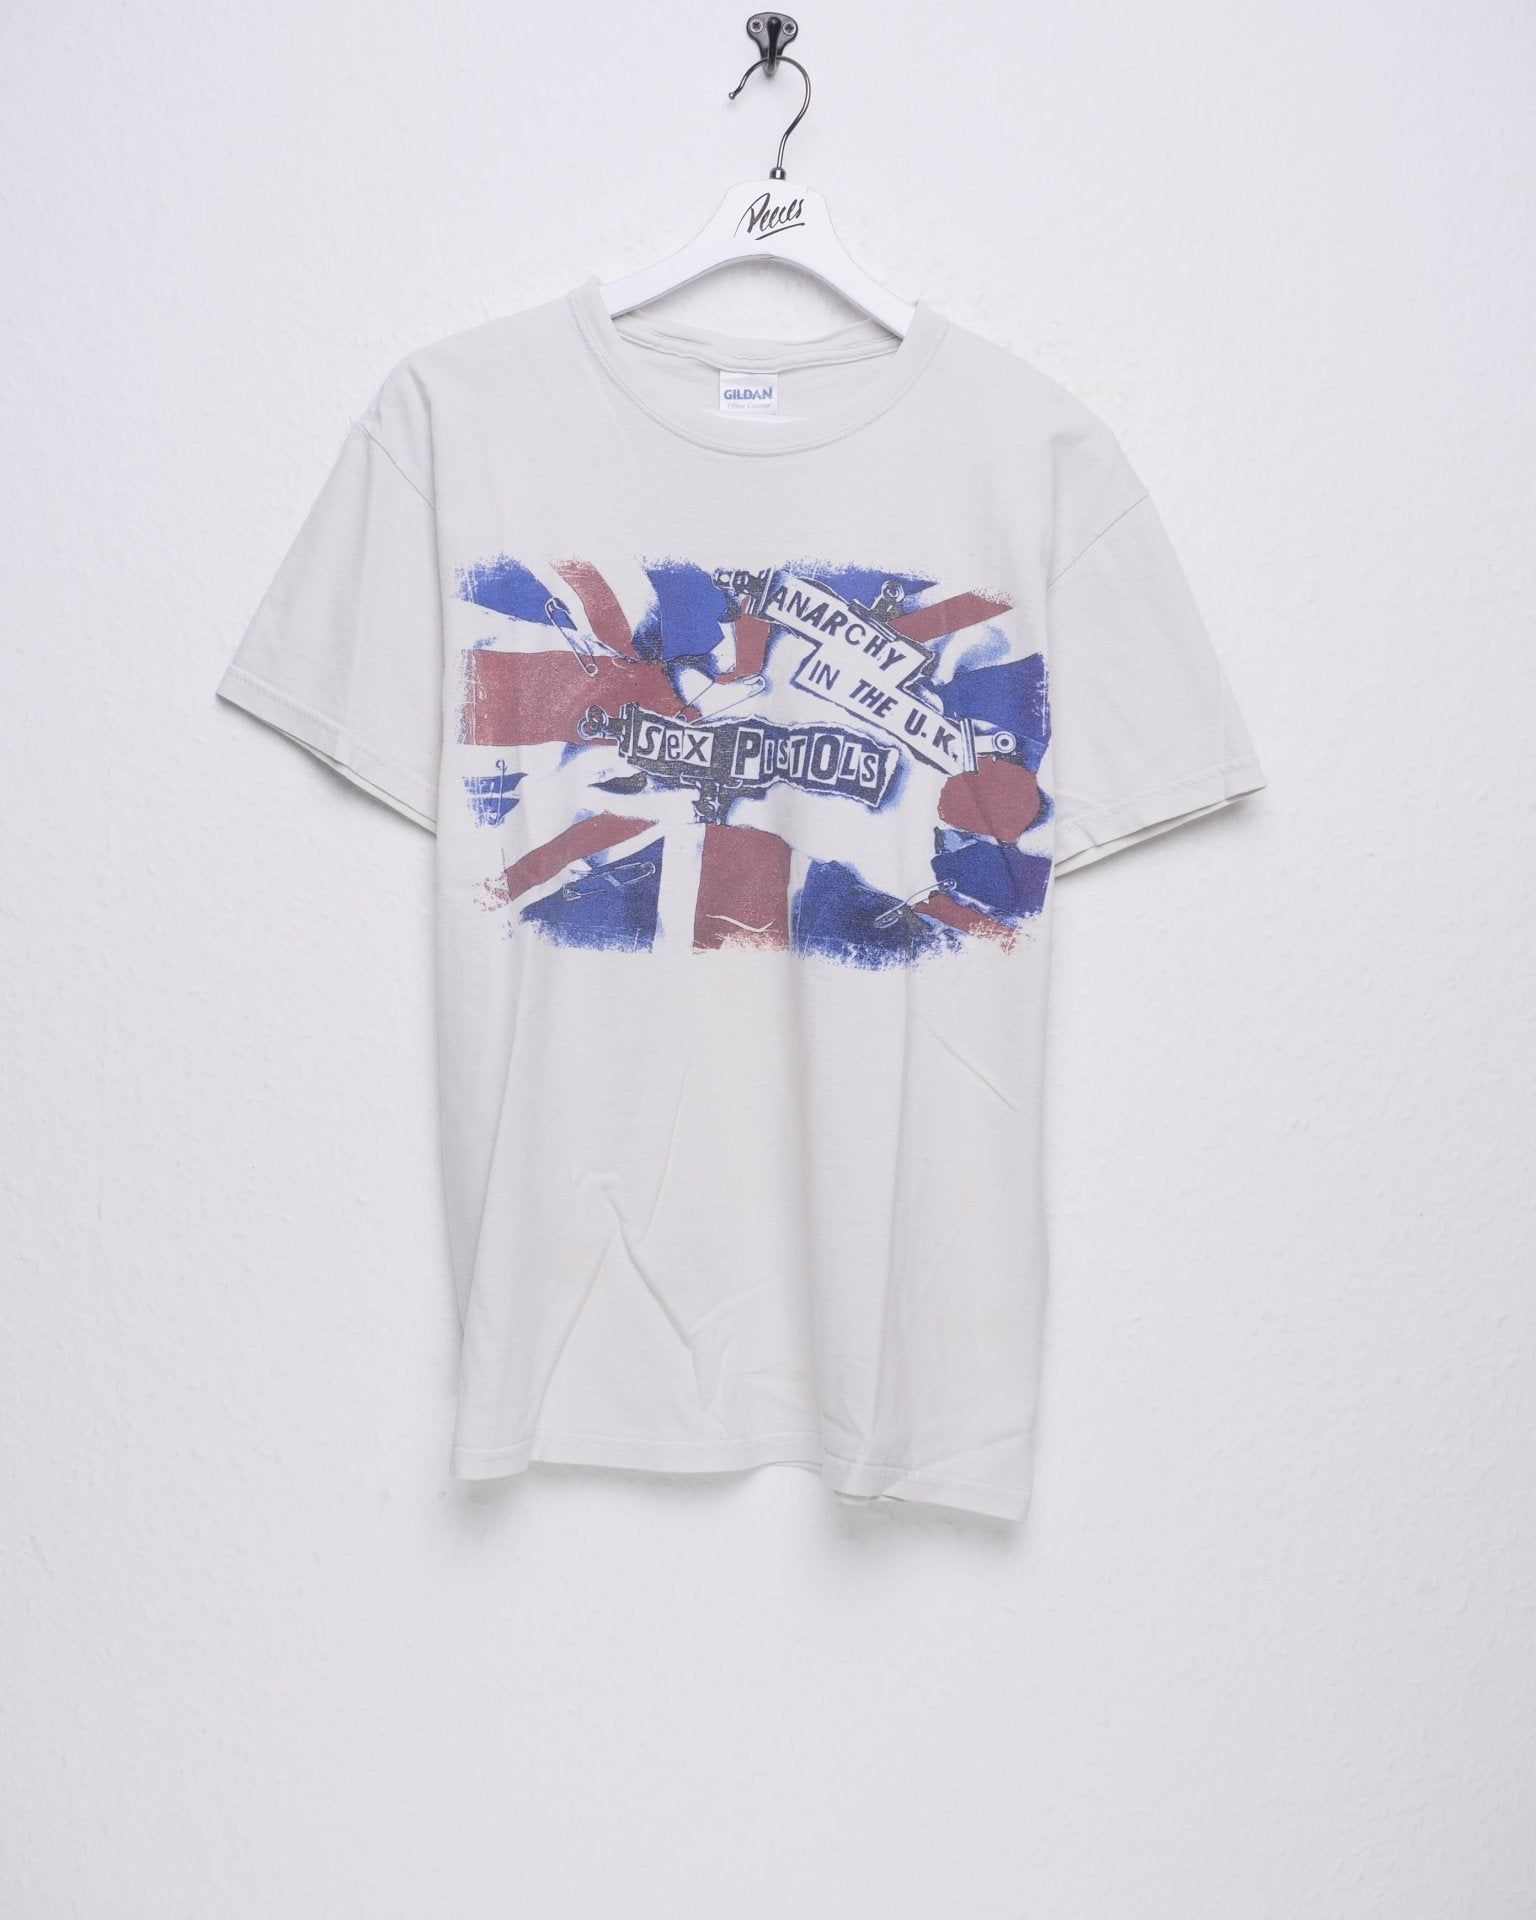 Sex Pistols printed Logo Shirt - Peeces